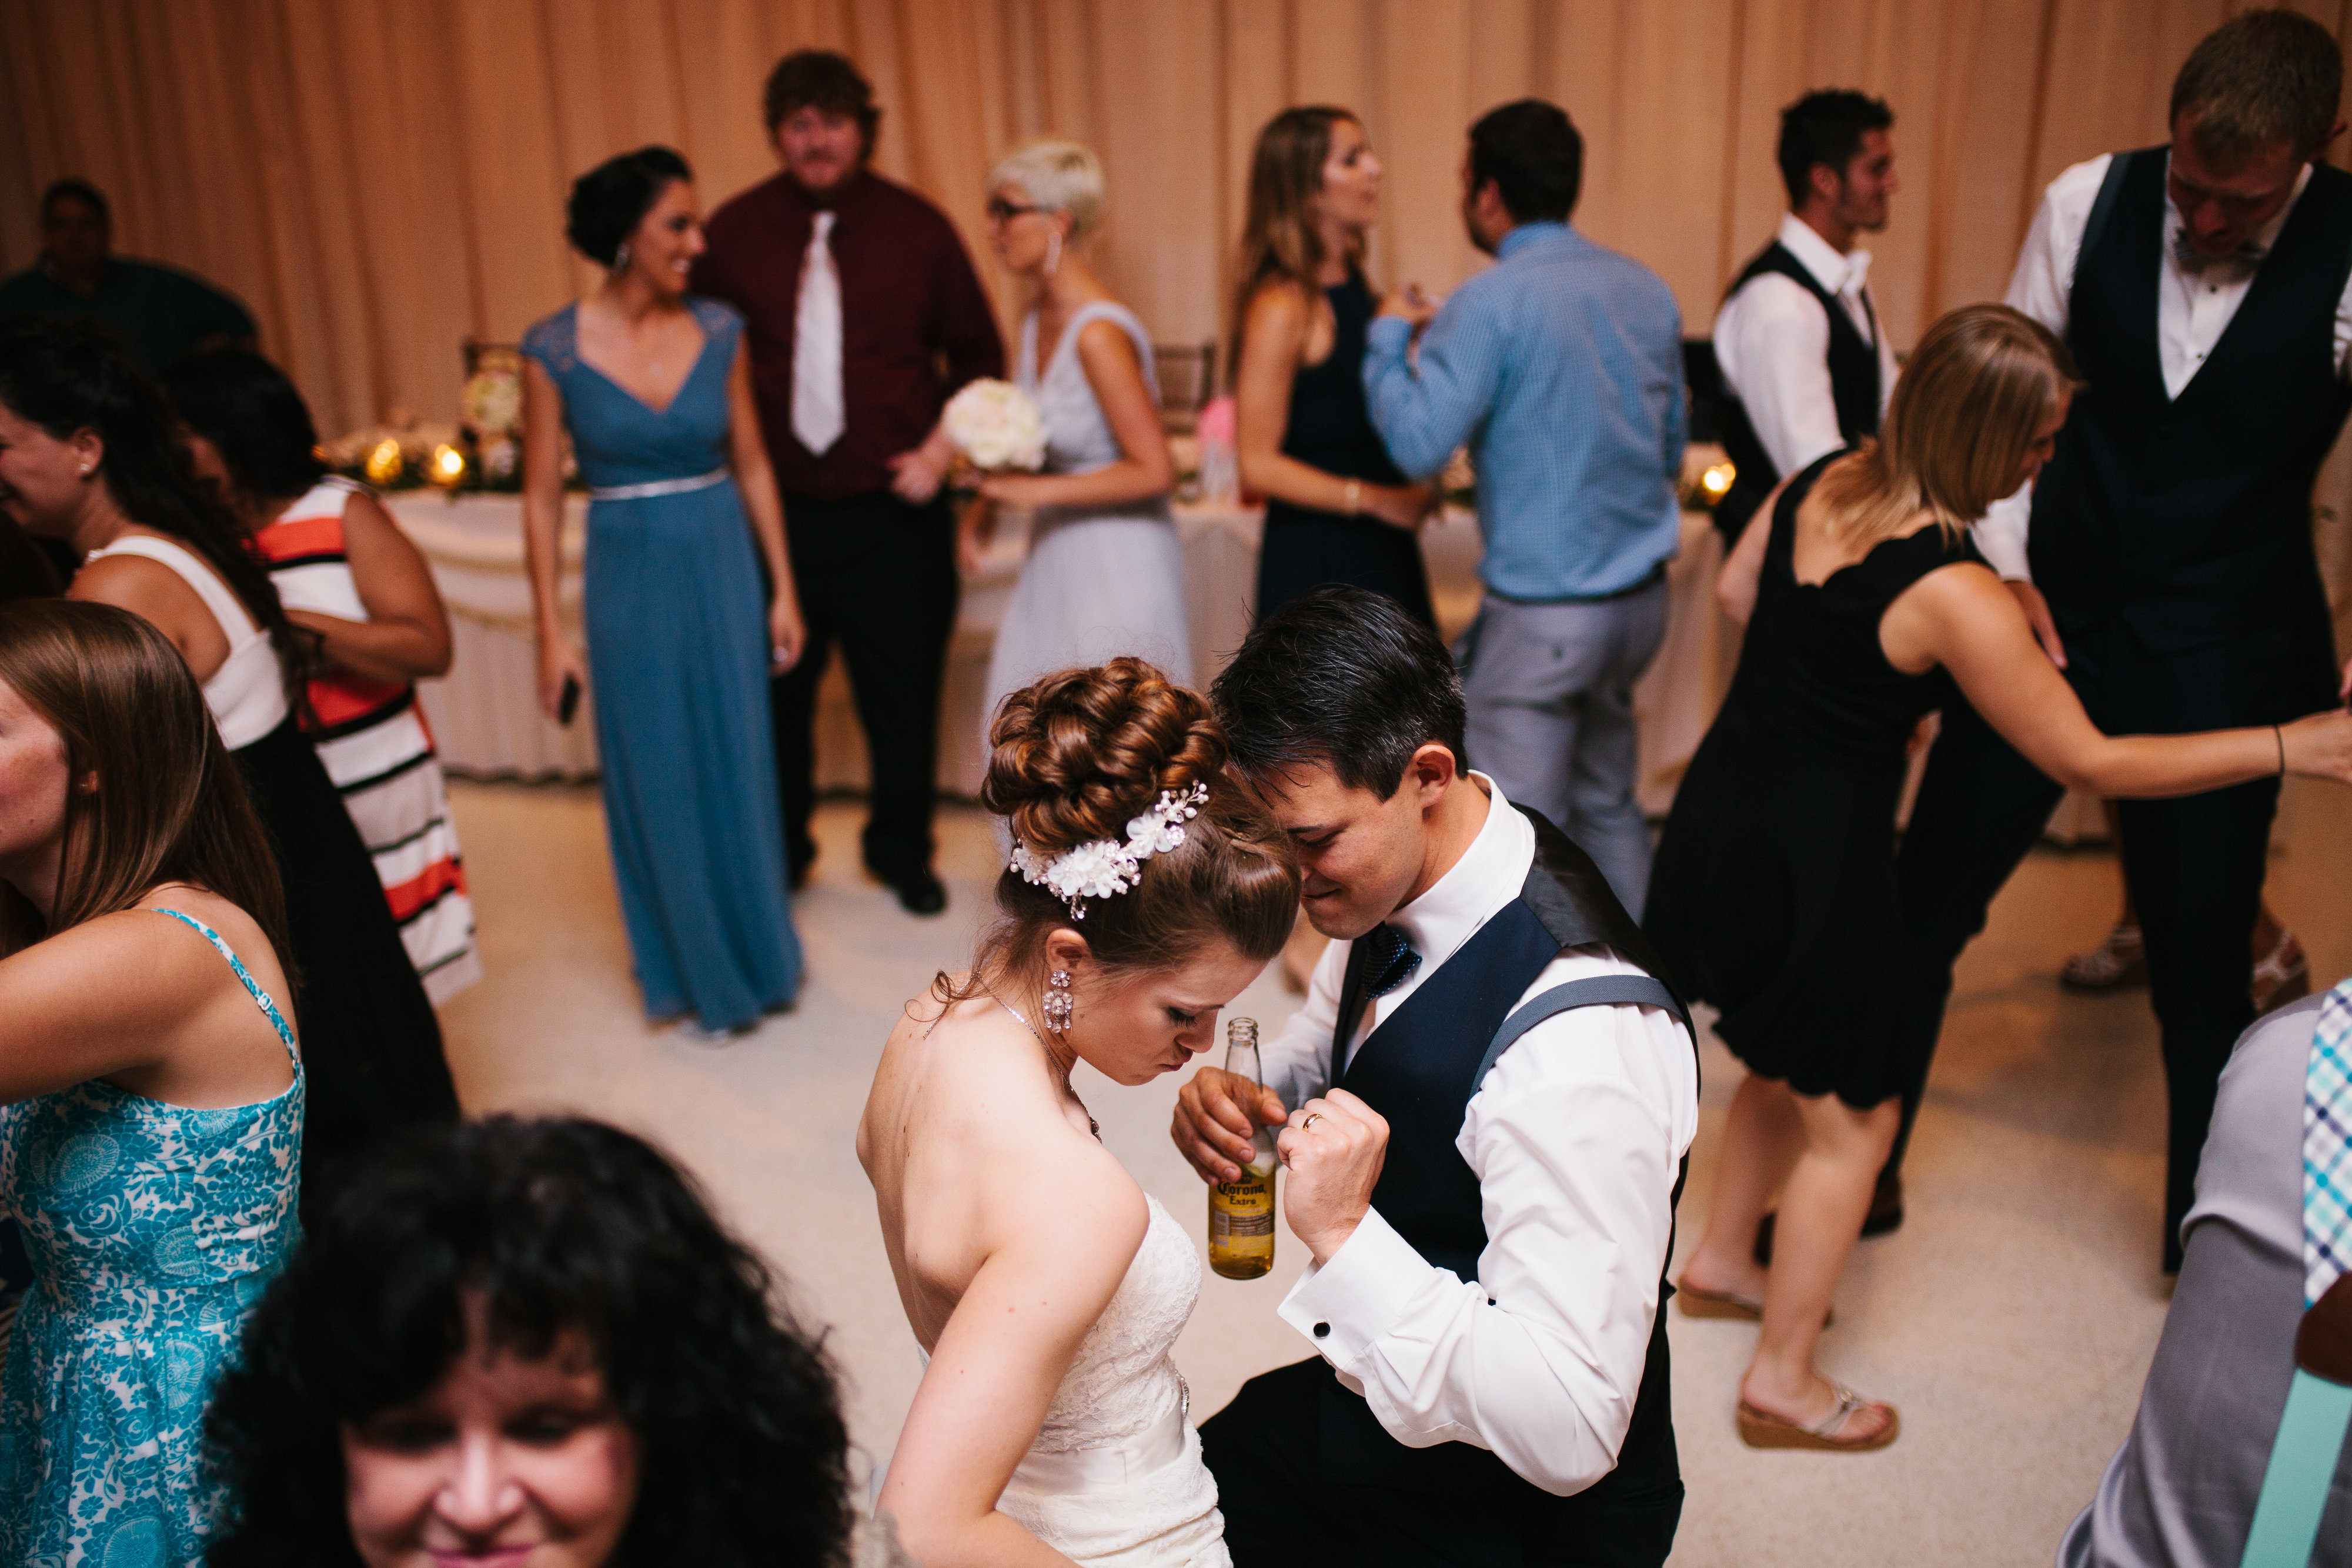 couple dancing at wedding reception